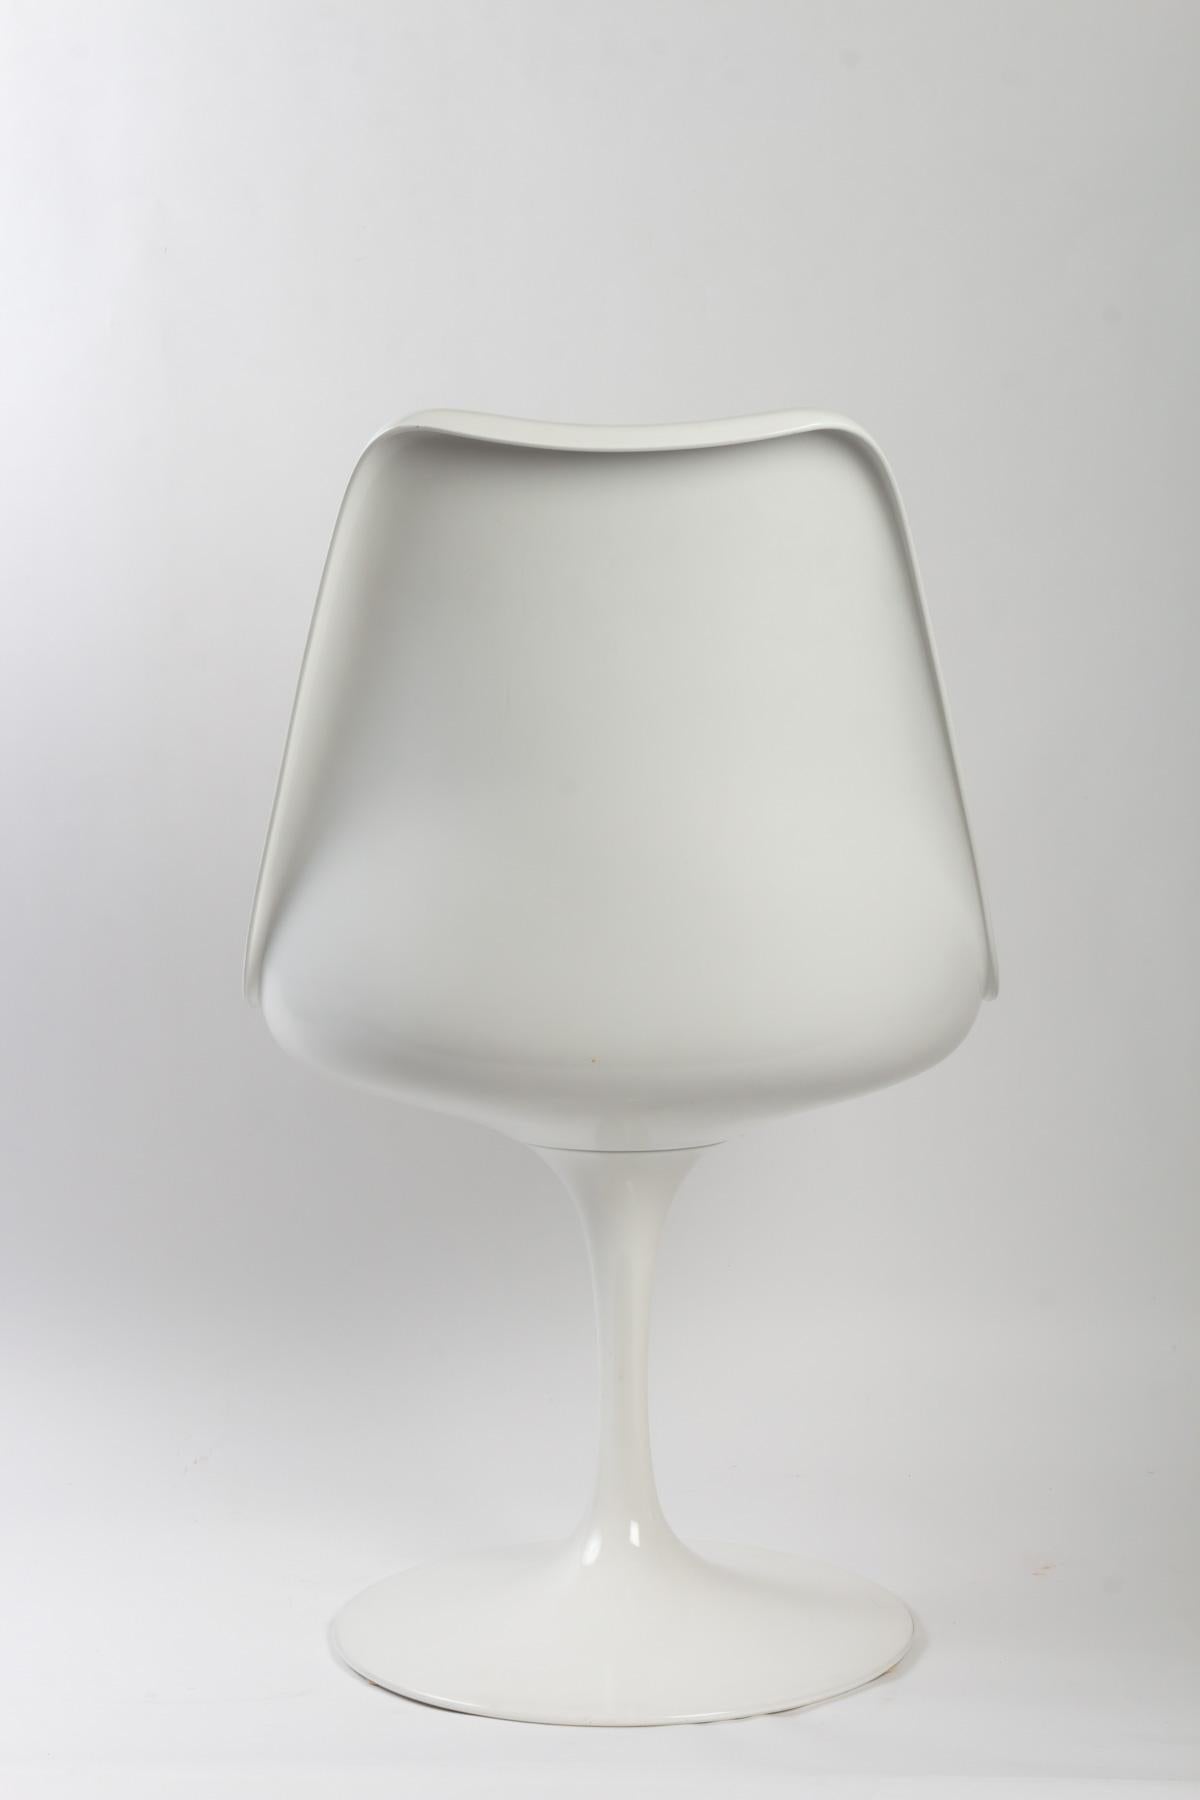 Eero Saarinen & Knoll 4 Tulip Chairs In Good Condition For Sale In Saint-Ouen, FR